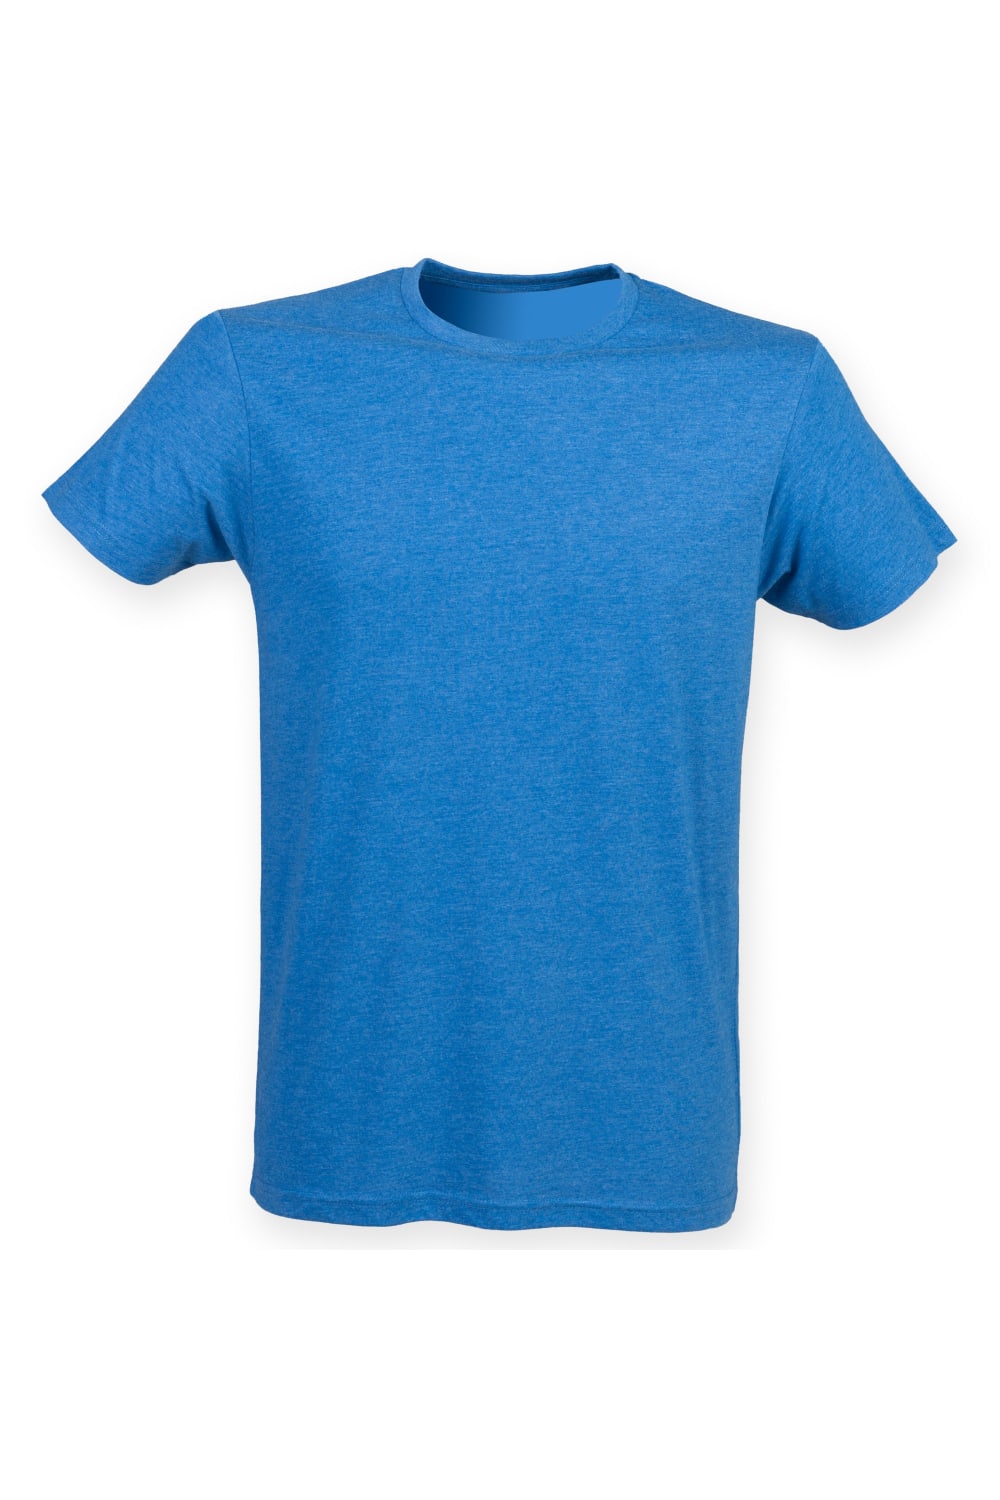 Skinnifit Mens Triblend Short Sleeve T-Shirt (Blue Triblend)